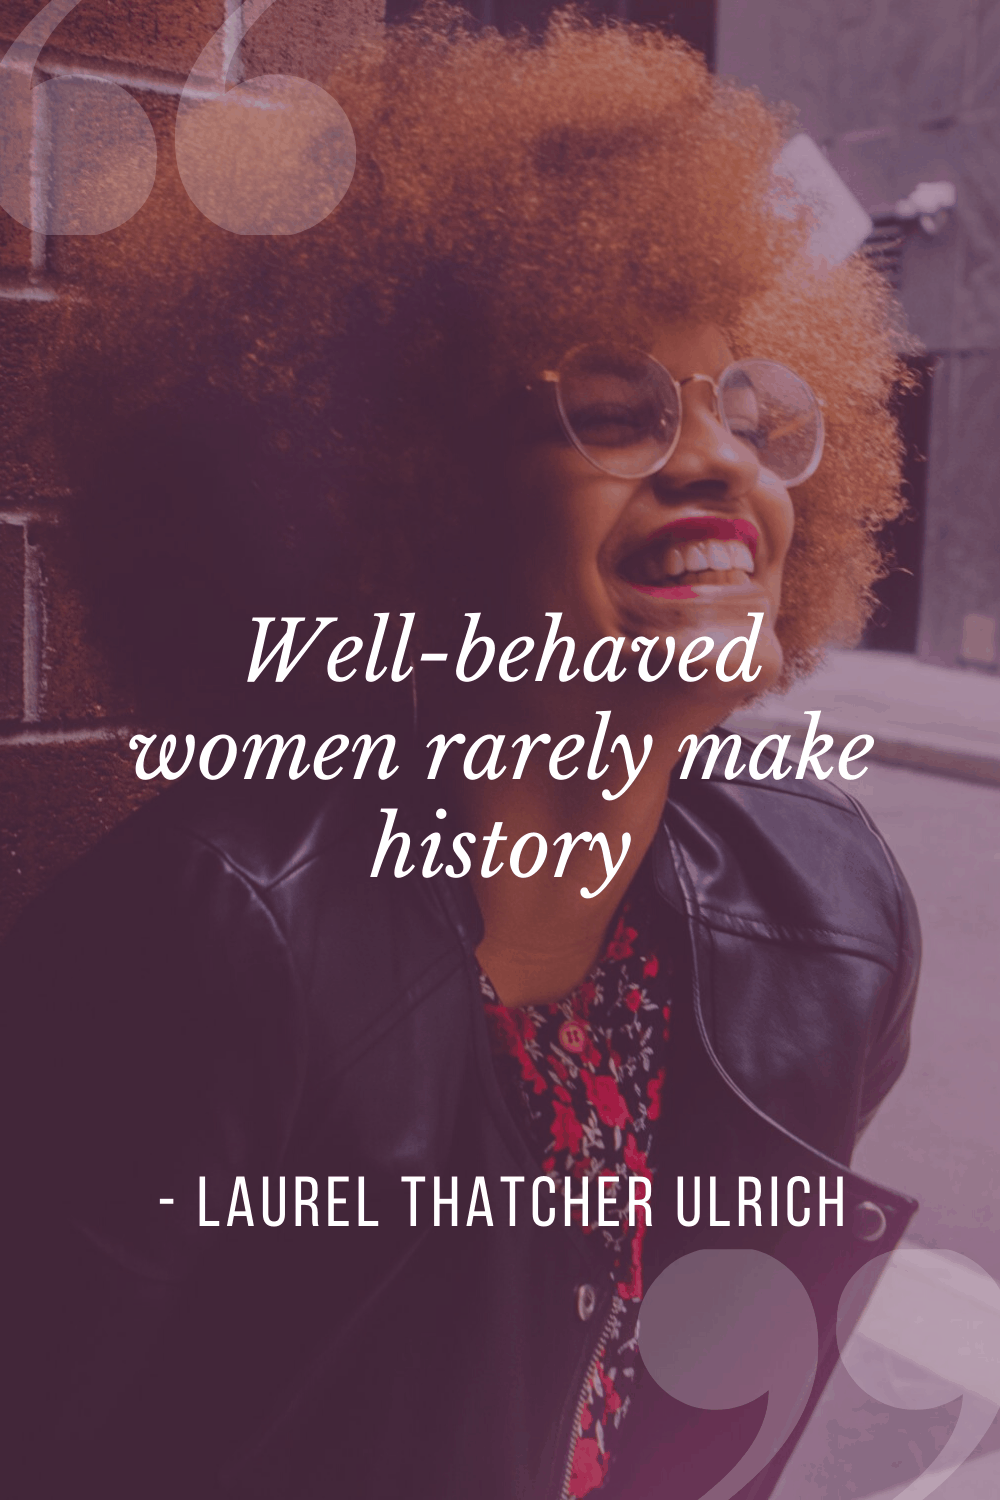 “Well-behaved women rarely make history”, Laurel Thatcher Ulrich